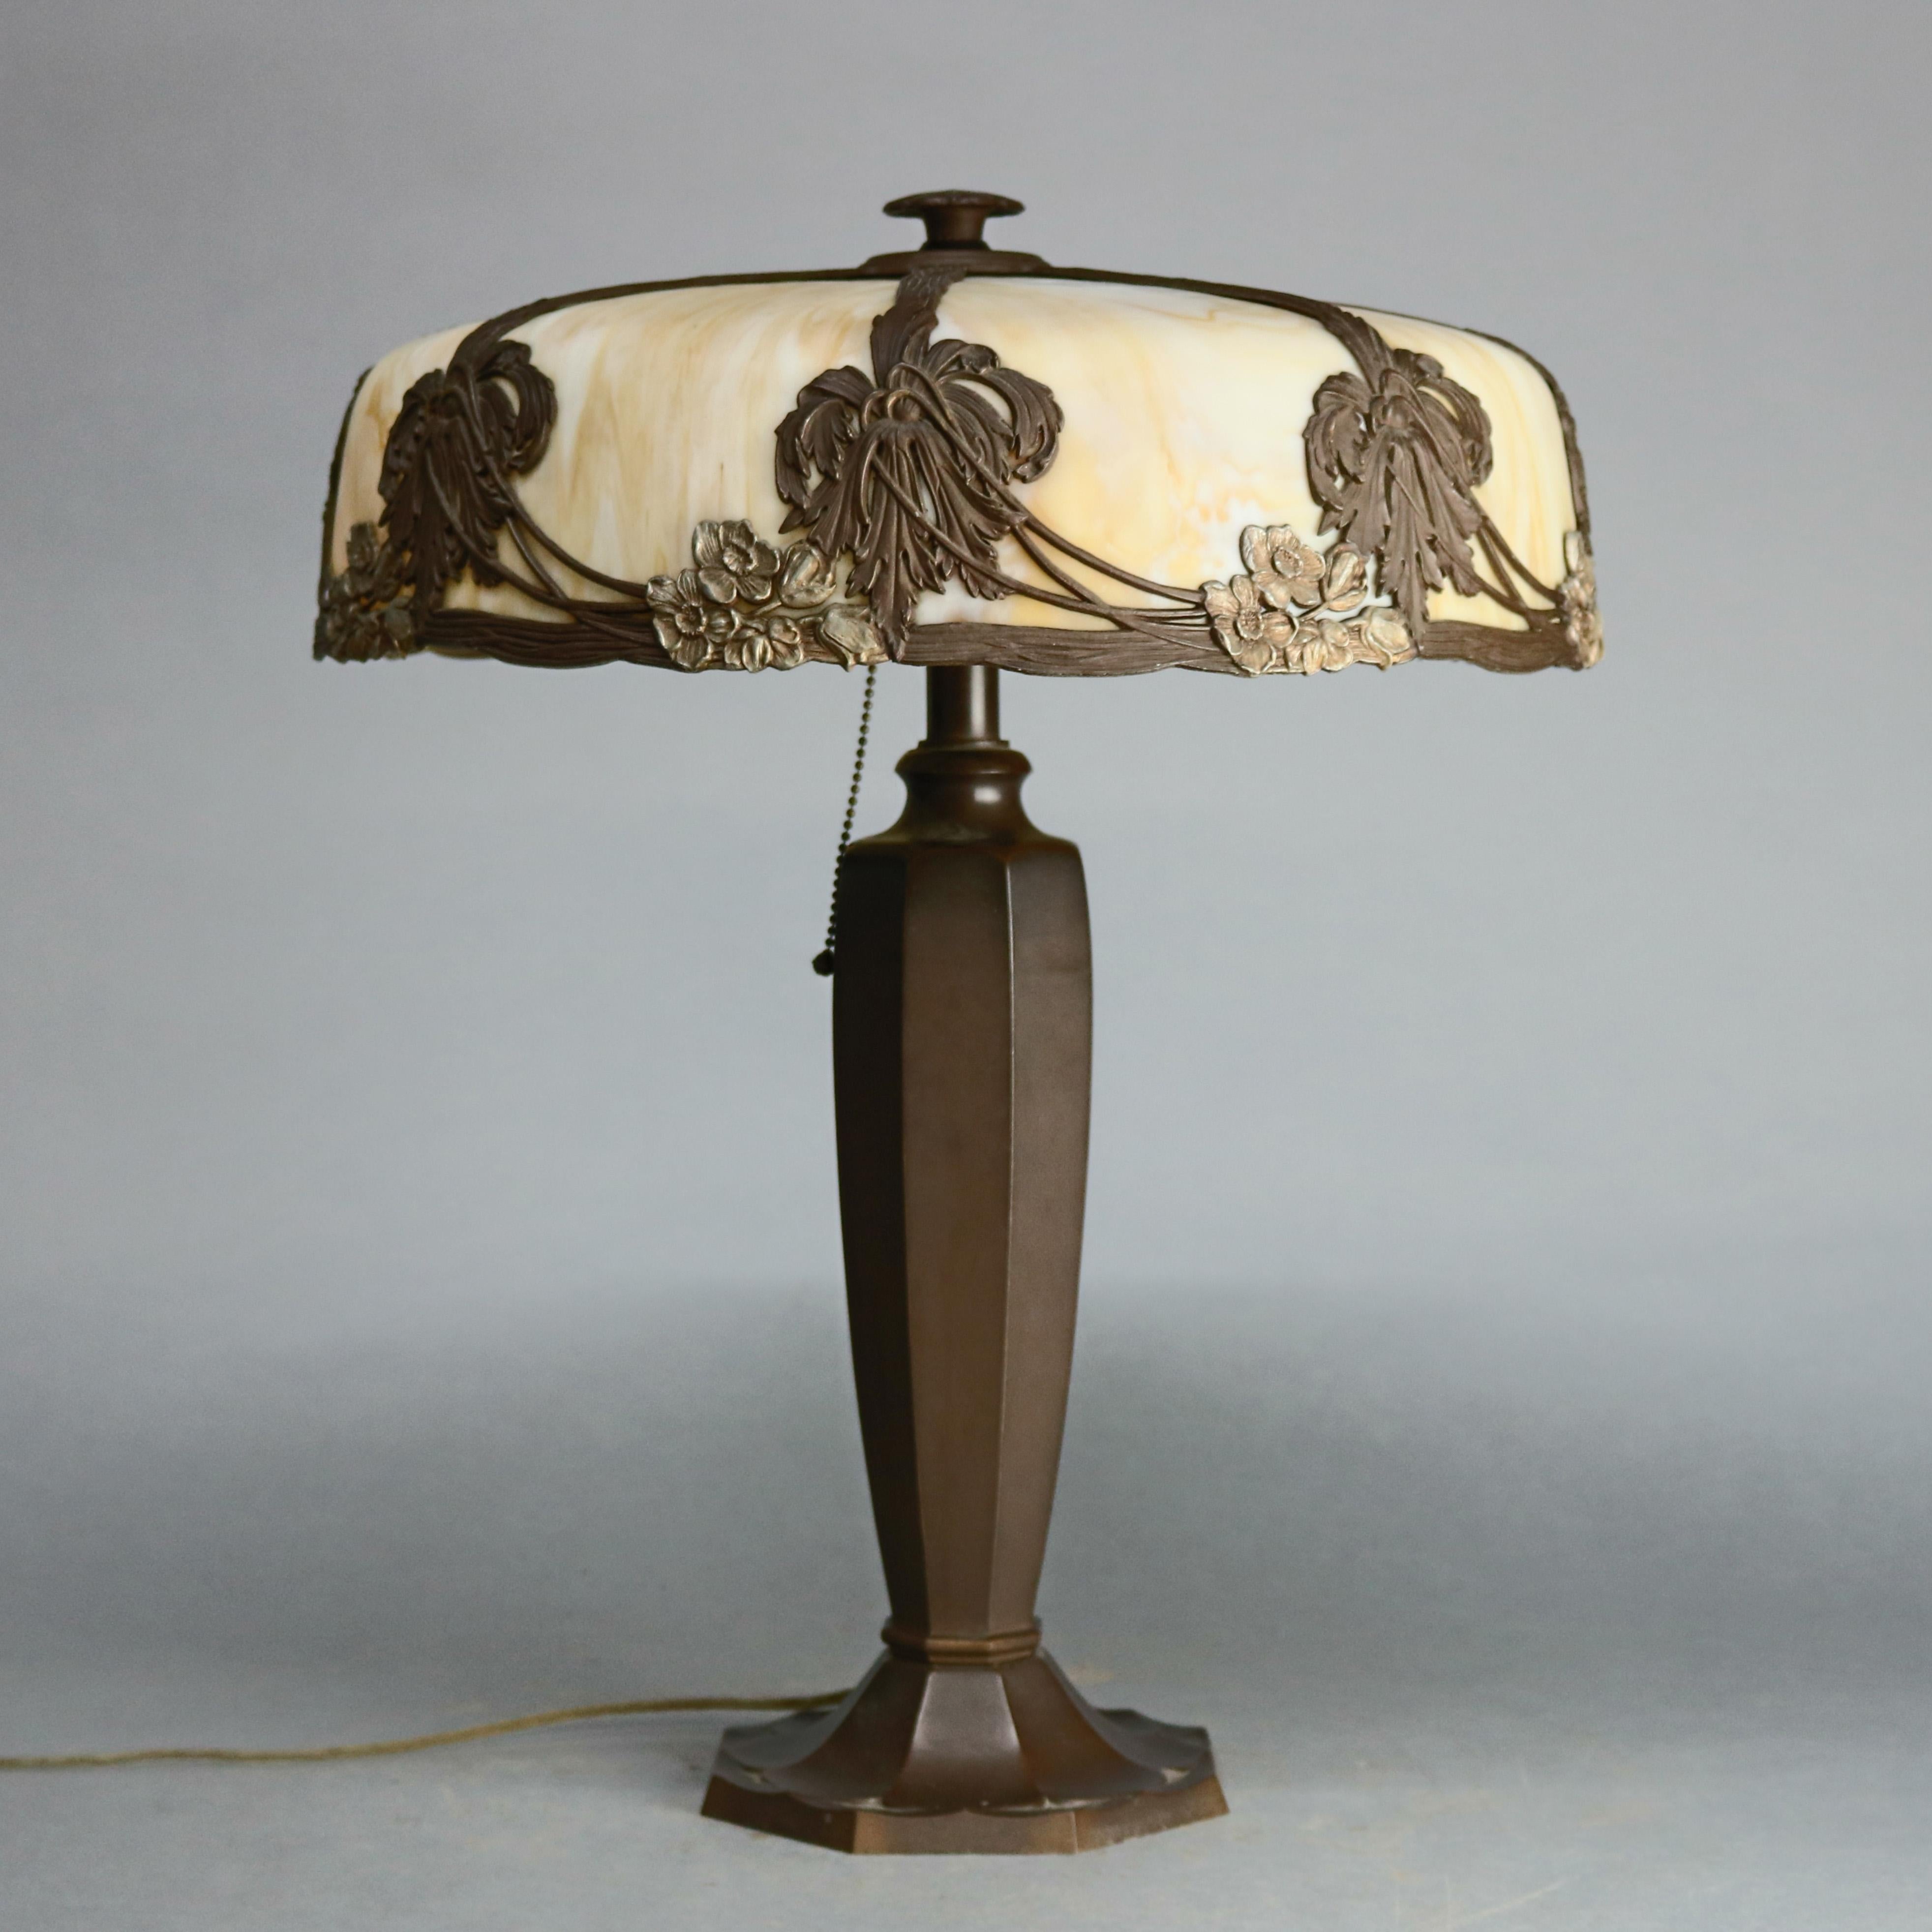 American Antique Arts & Crafts Bradley & Hubbard Curved Slag Glass Table Lamp, circa 1920